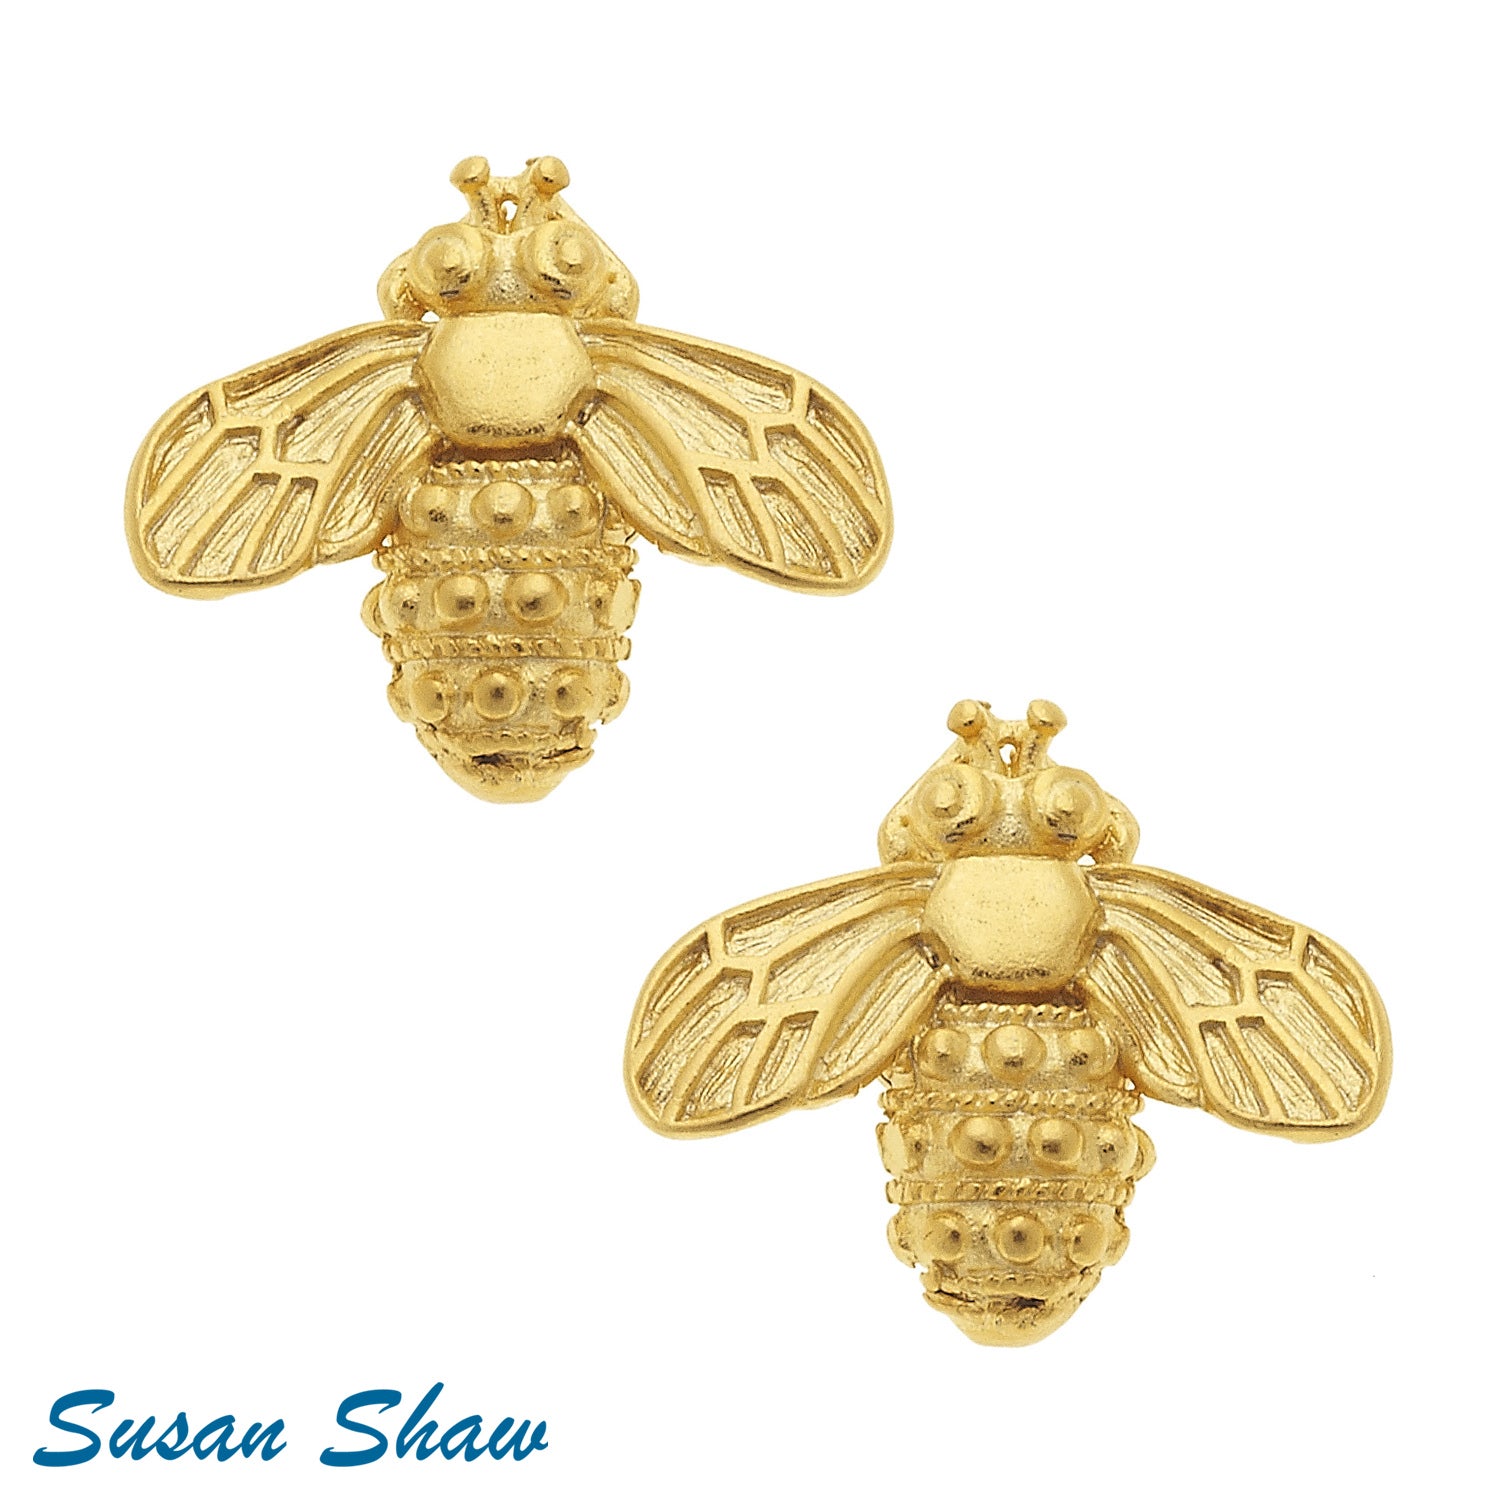 Susan Shaw Bee Studs.